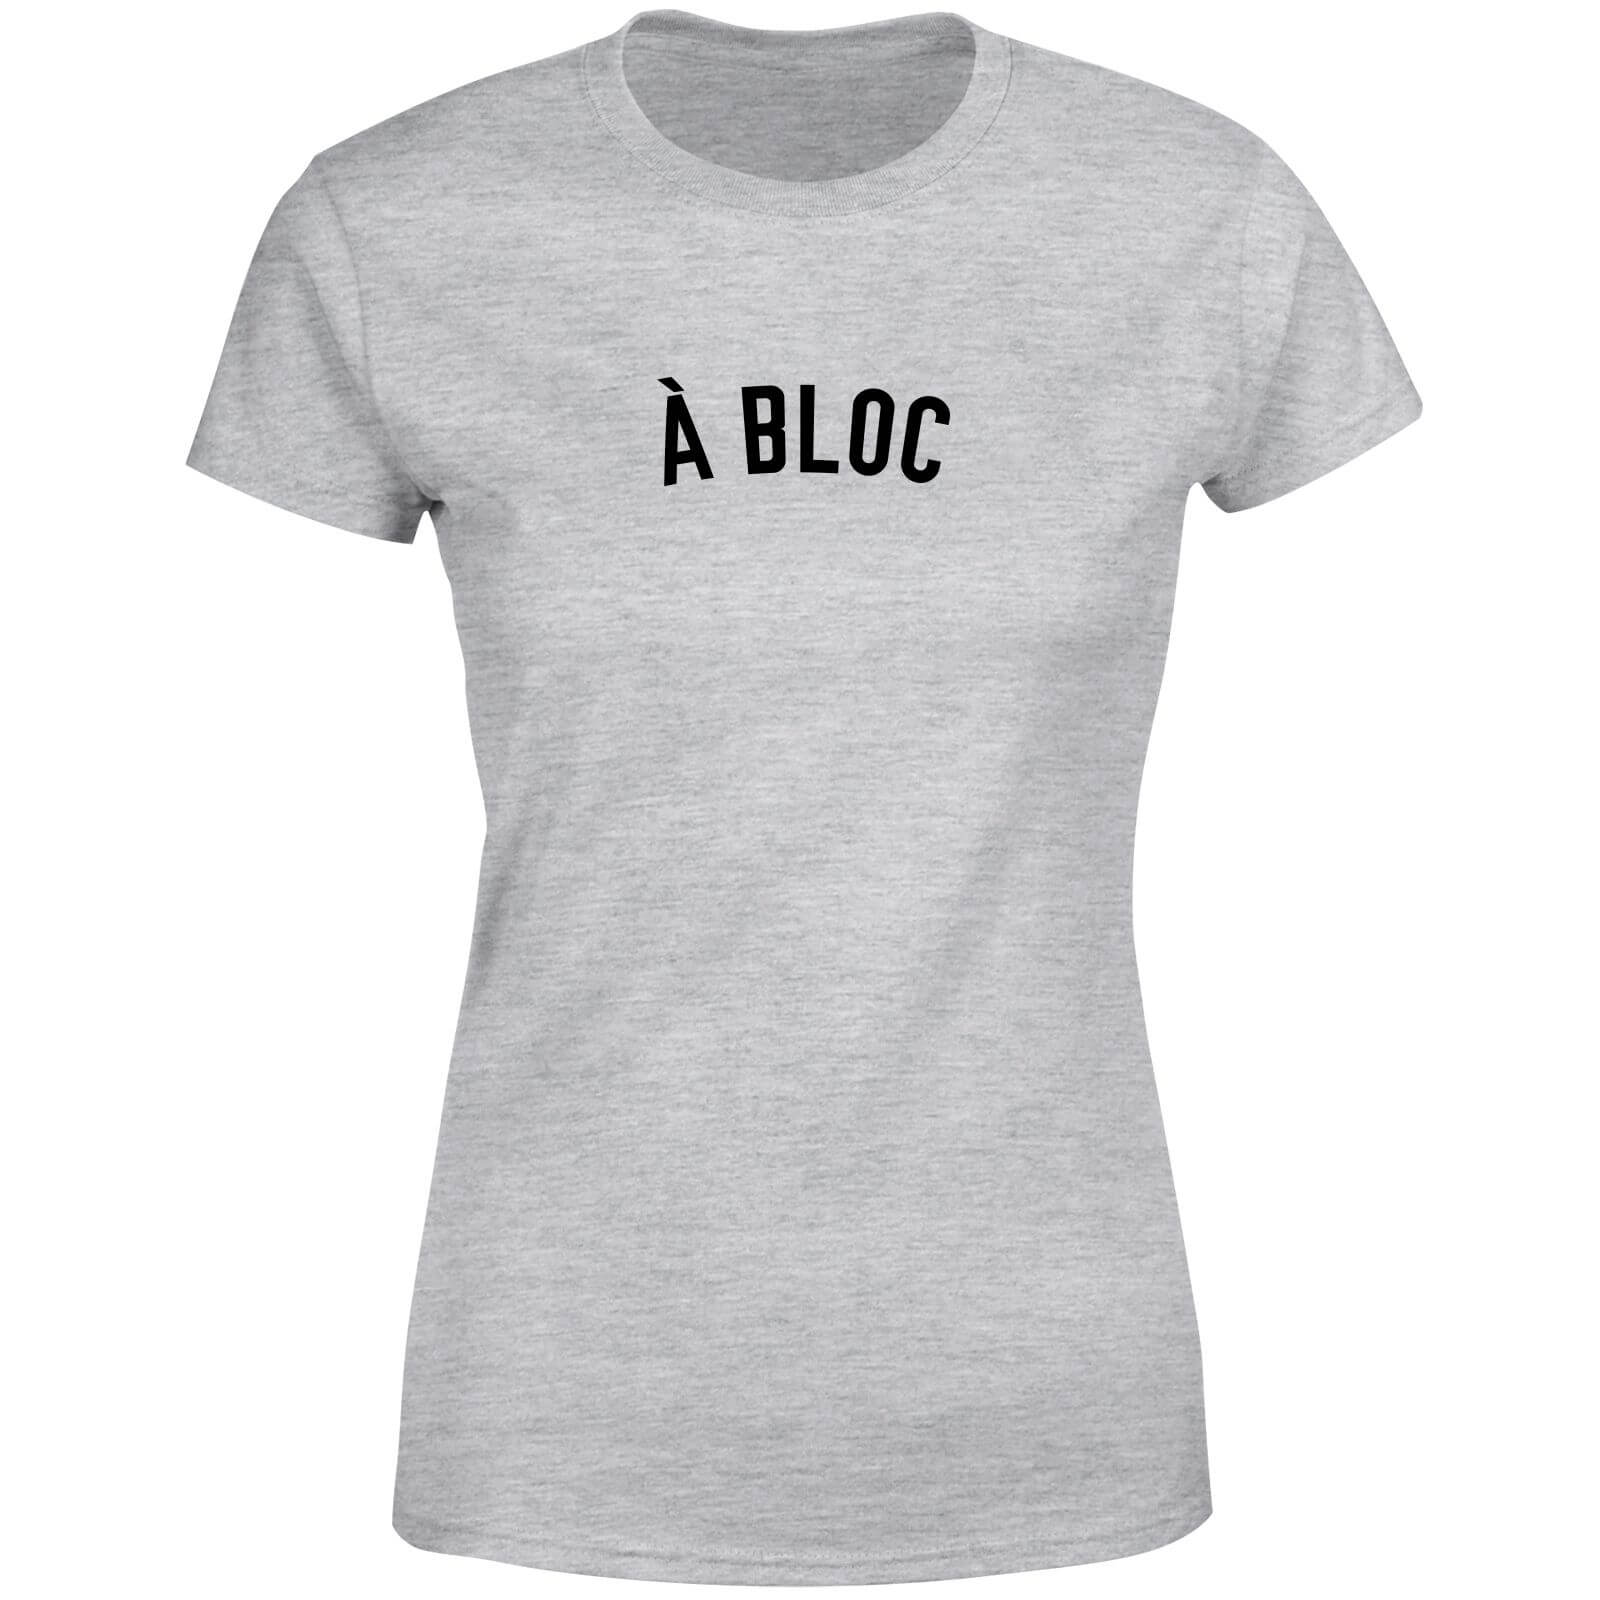 A Bloc Women's T-Shirt - Grey - XL - Grey